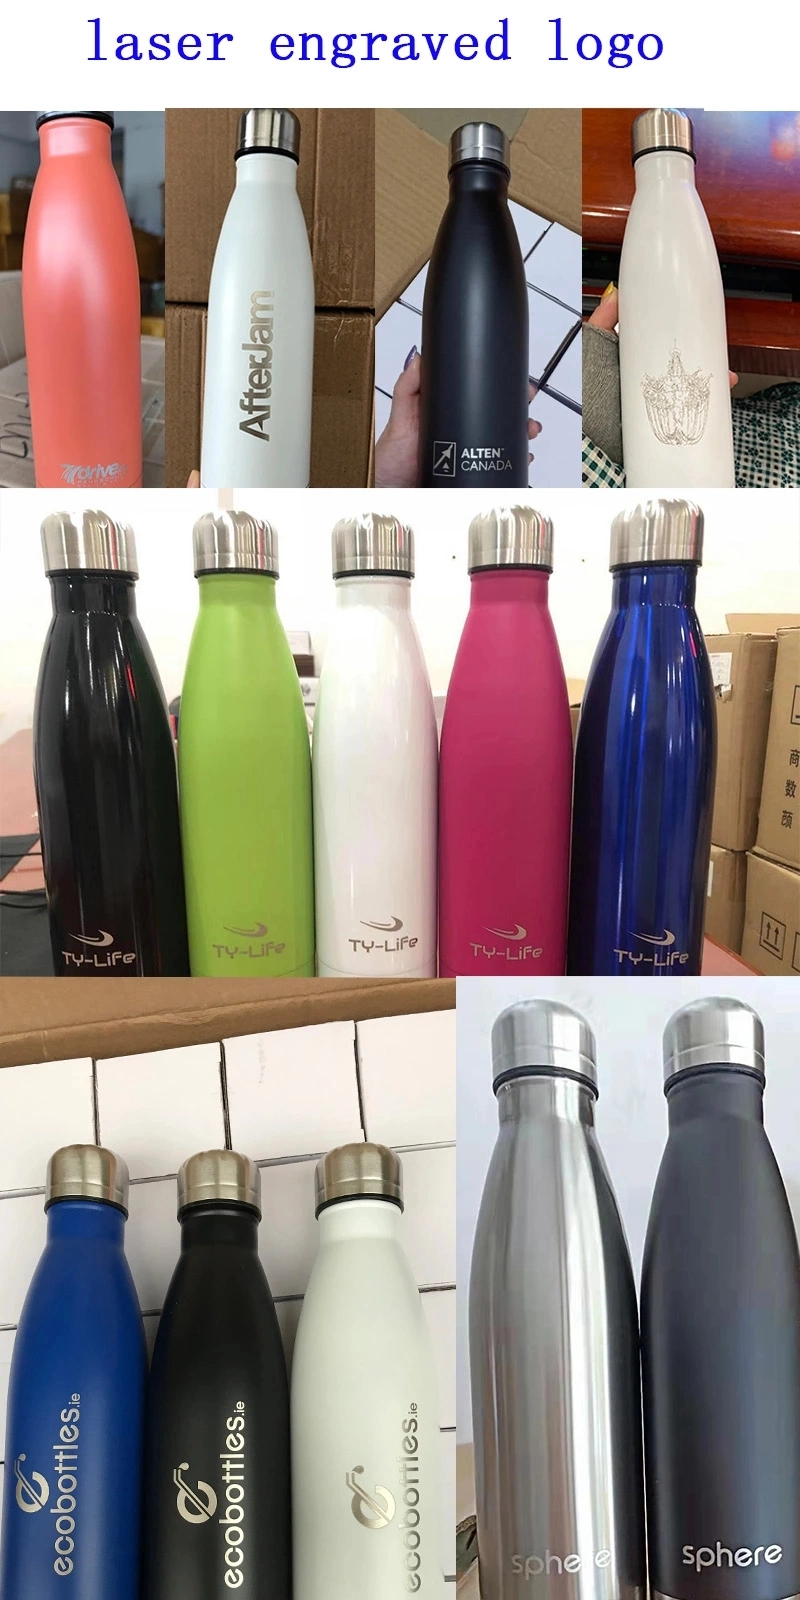 Swell Wholesale Eco-Friendly 500ml/17oz/750ml/25oz 750ml Cola Shape Custom Water Bottles